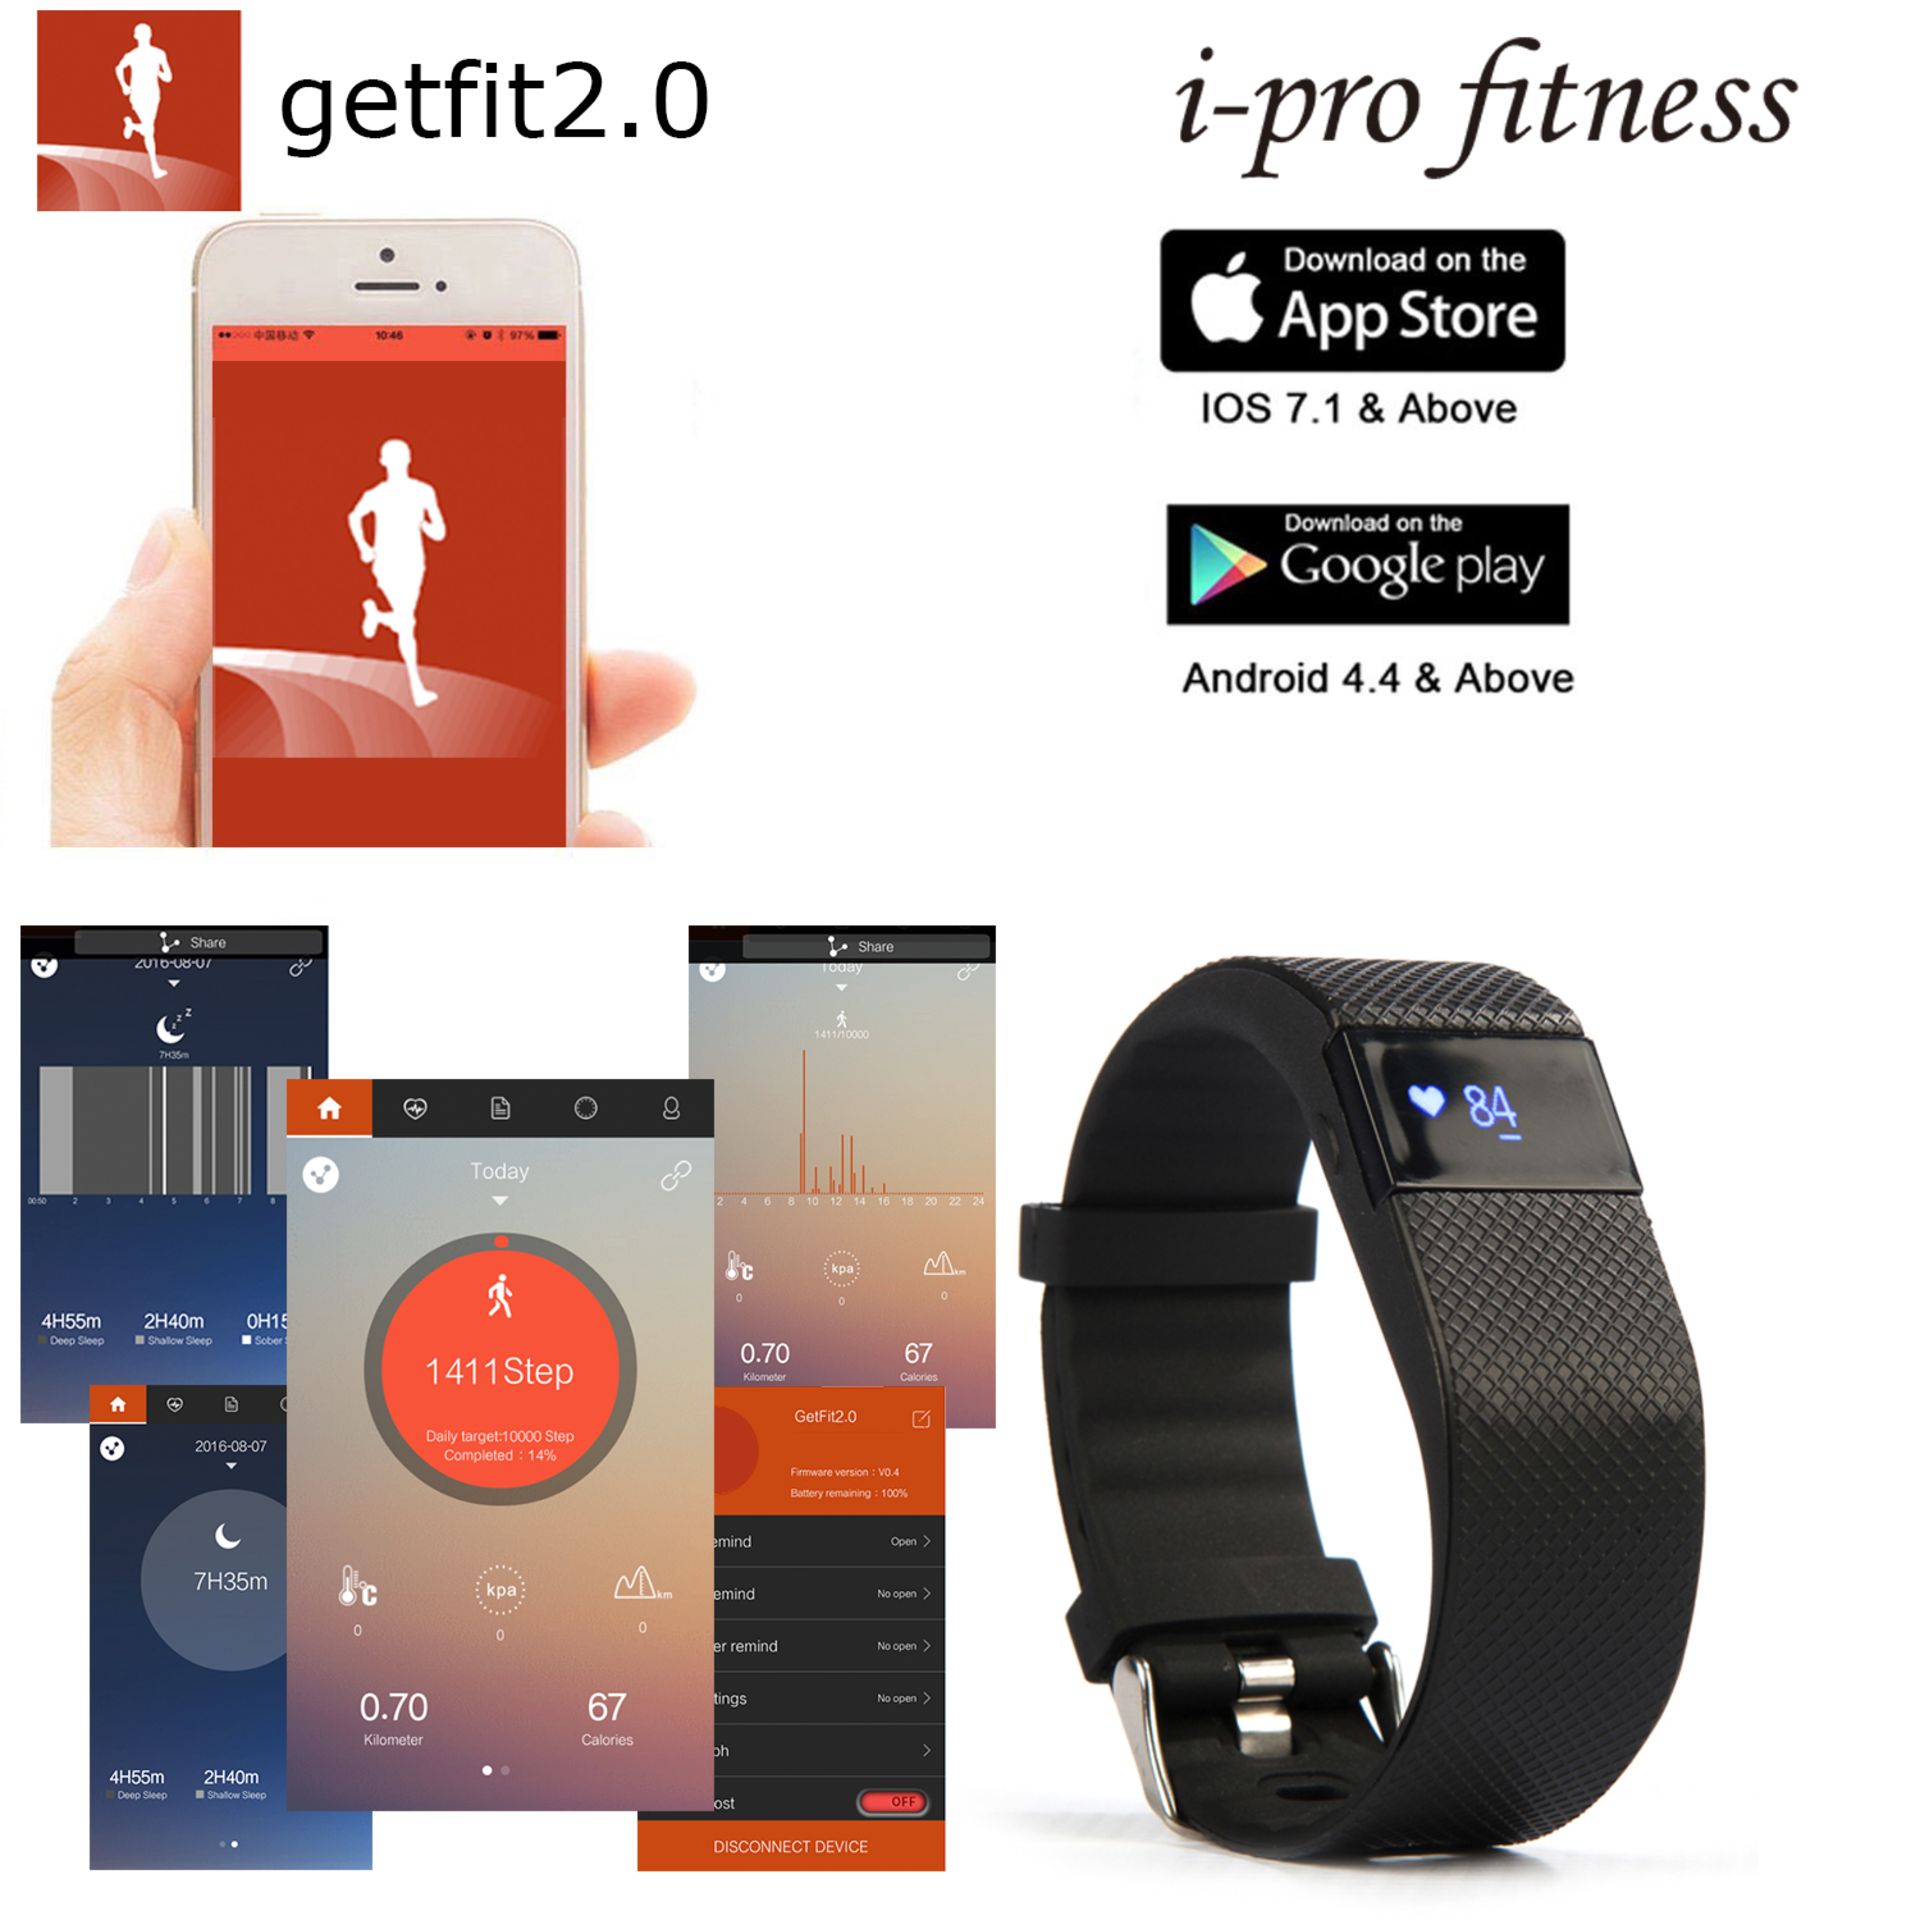 10x Fitness Tracker i-pro fitness, Bluetooth 4.0 Sports Smart Bracelet, Heart Rate Monitor - Image 7 of 8